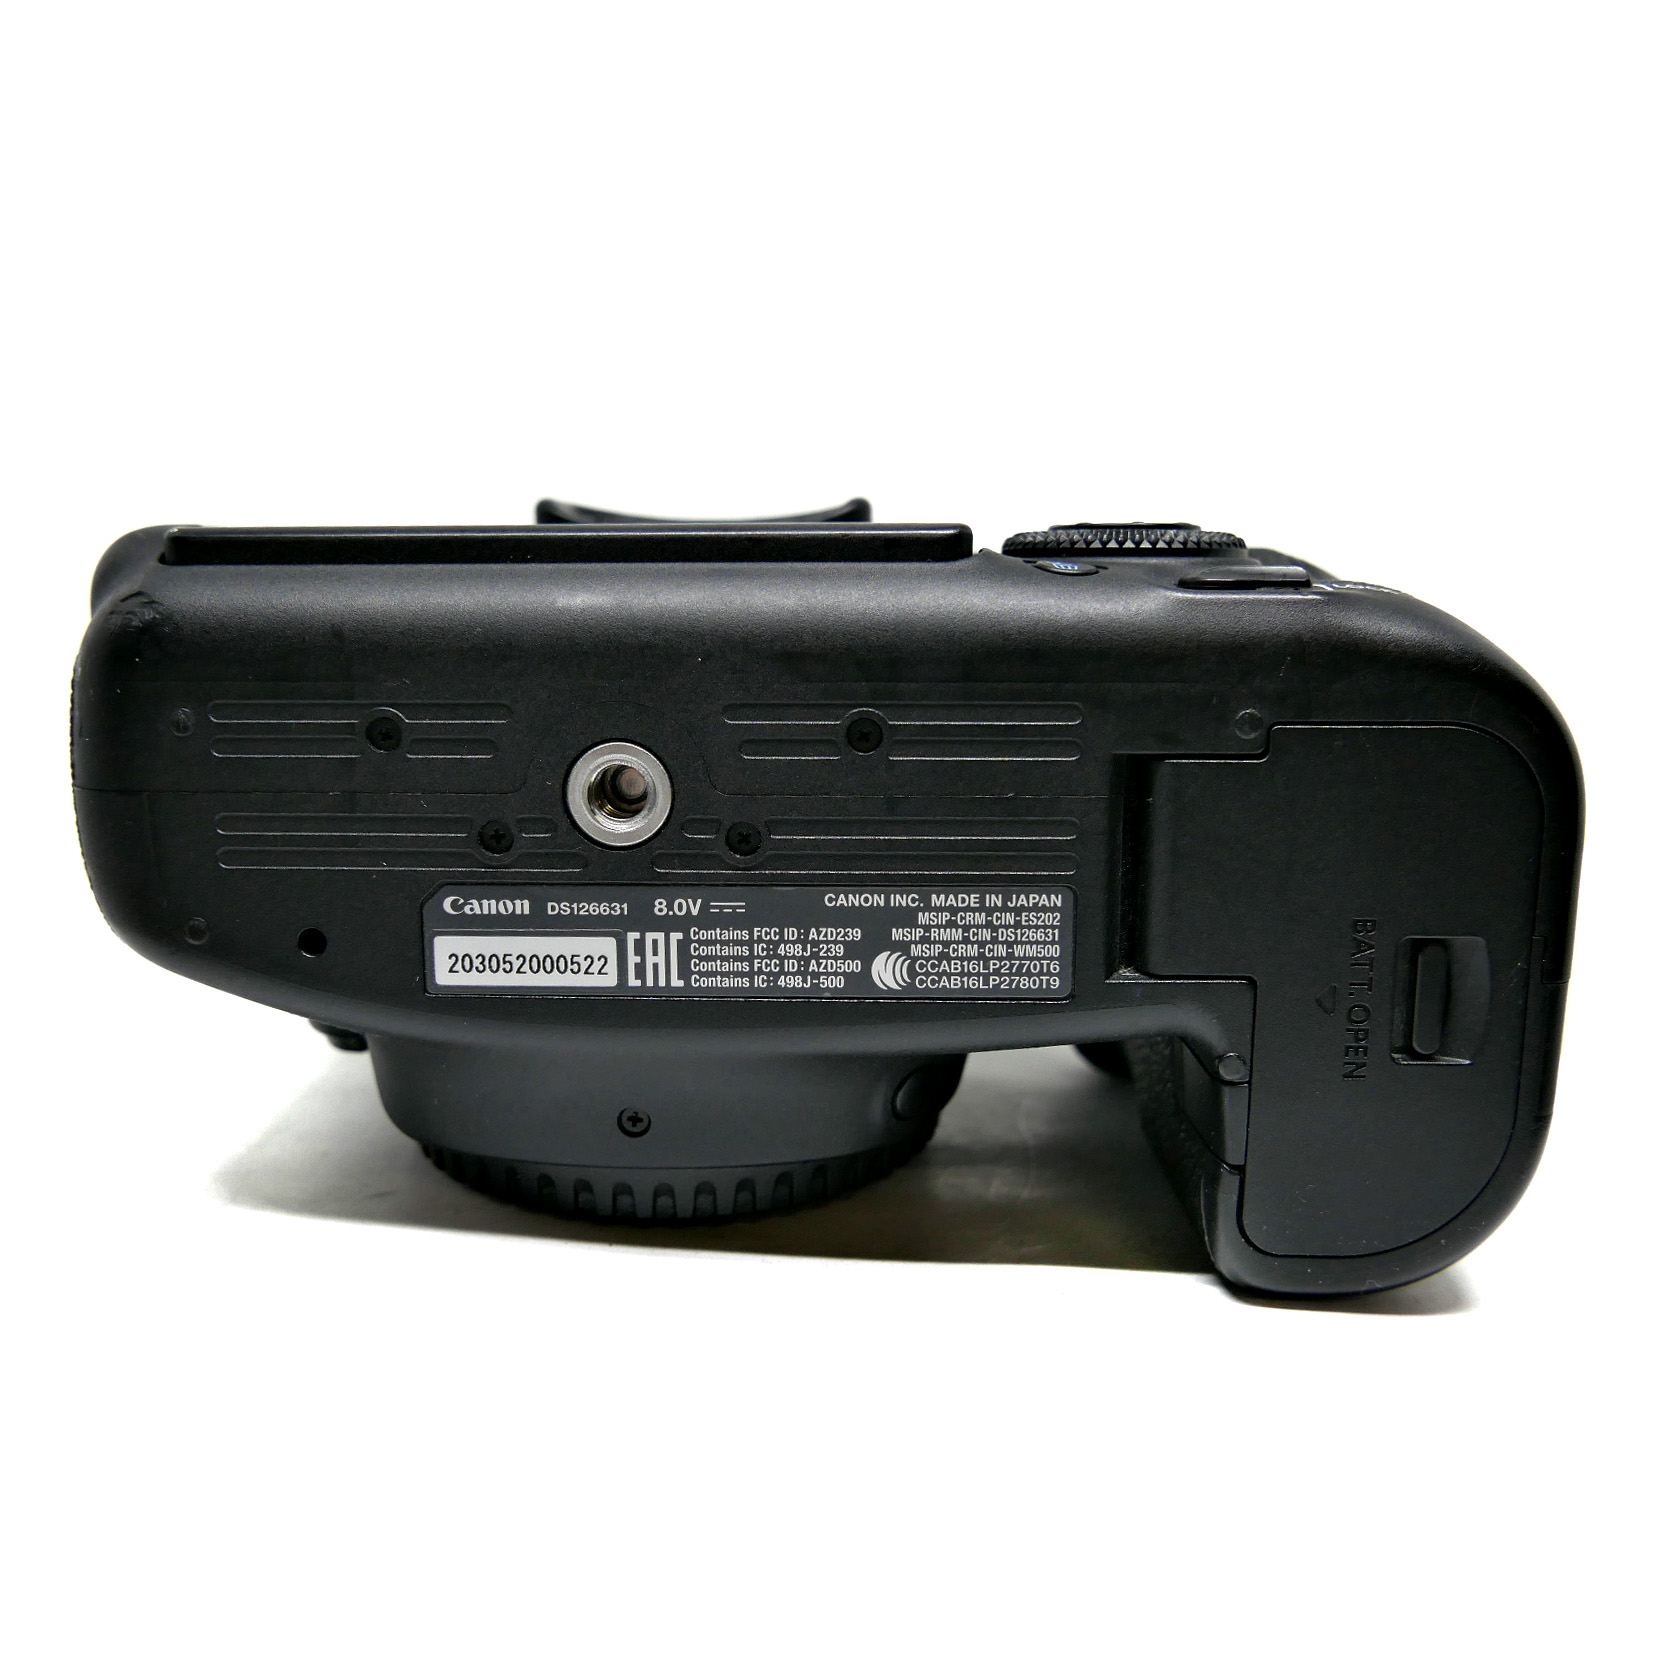 (Myyty) Canon EOS 6D Mark II (SC:9190) (käytetty) sis. ALV